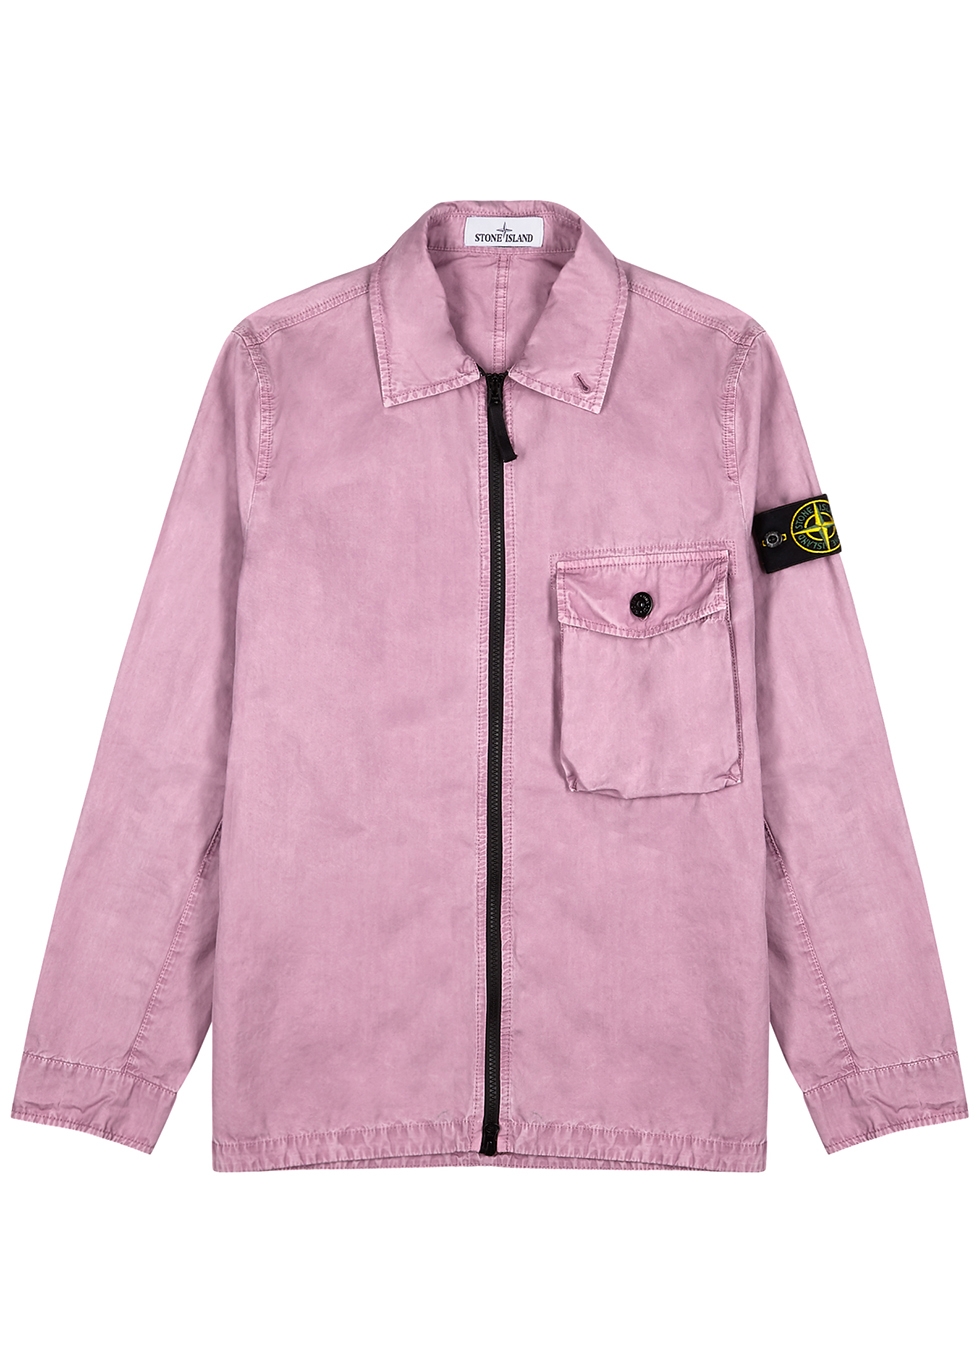 Stone Island Pink cotton overshirt - Harvey Nichols